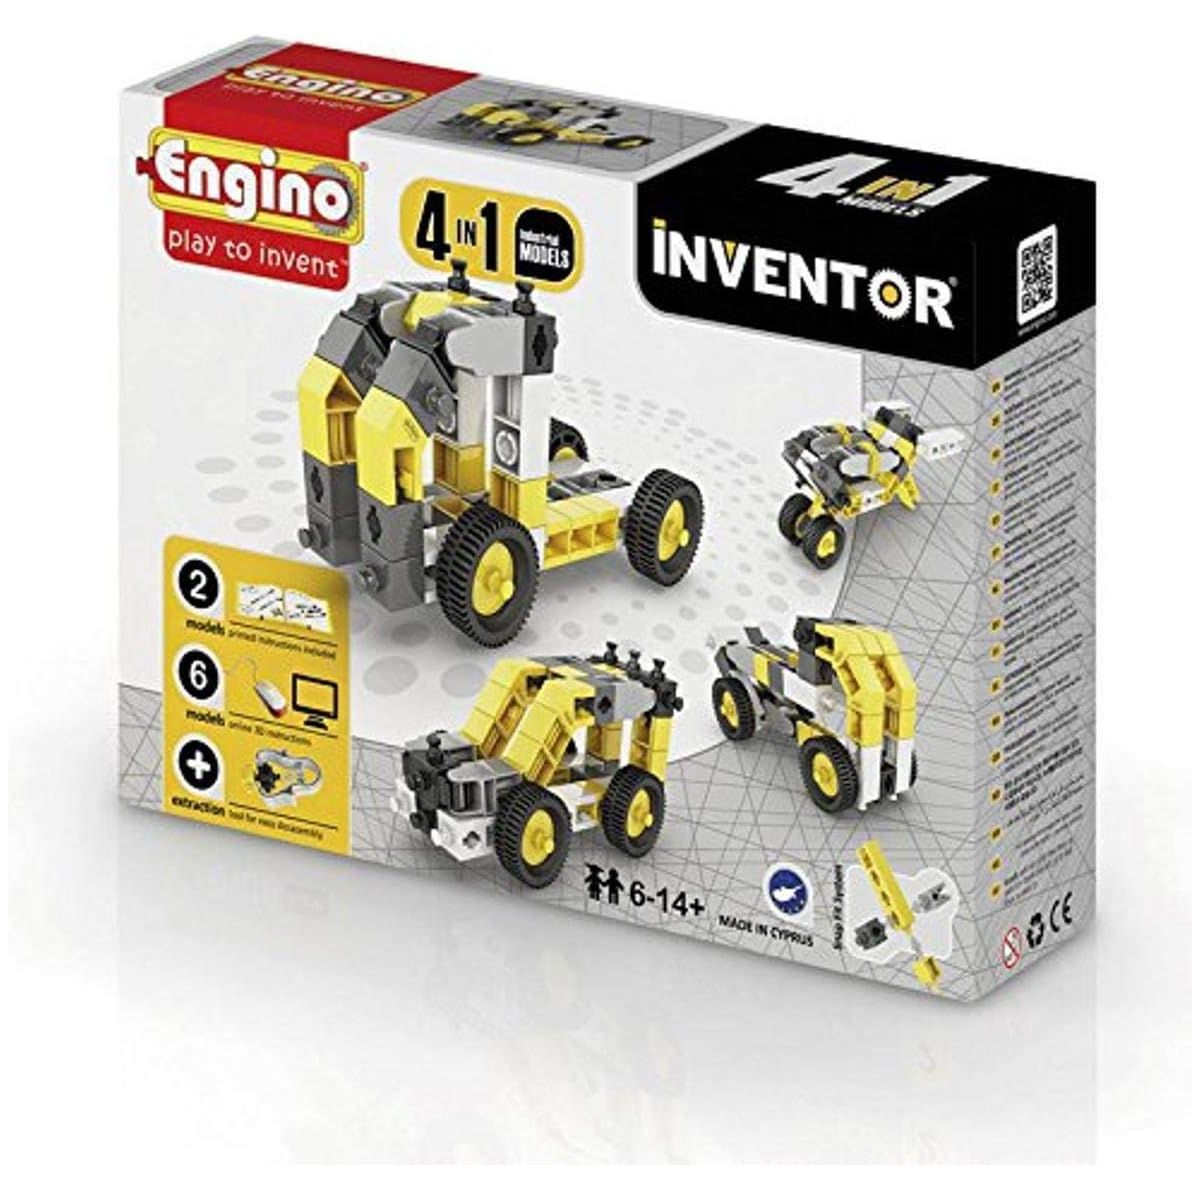 Engino Inventor 4 Models Industrial PB14-434 - Yellow